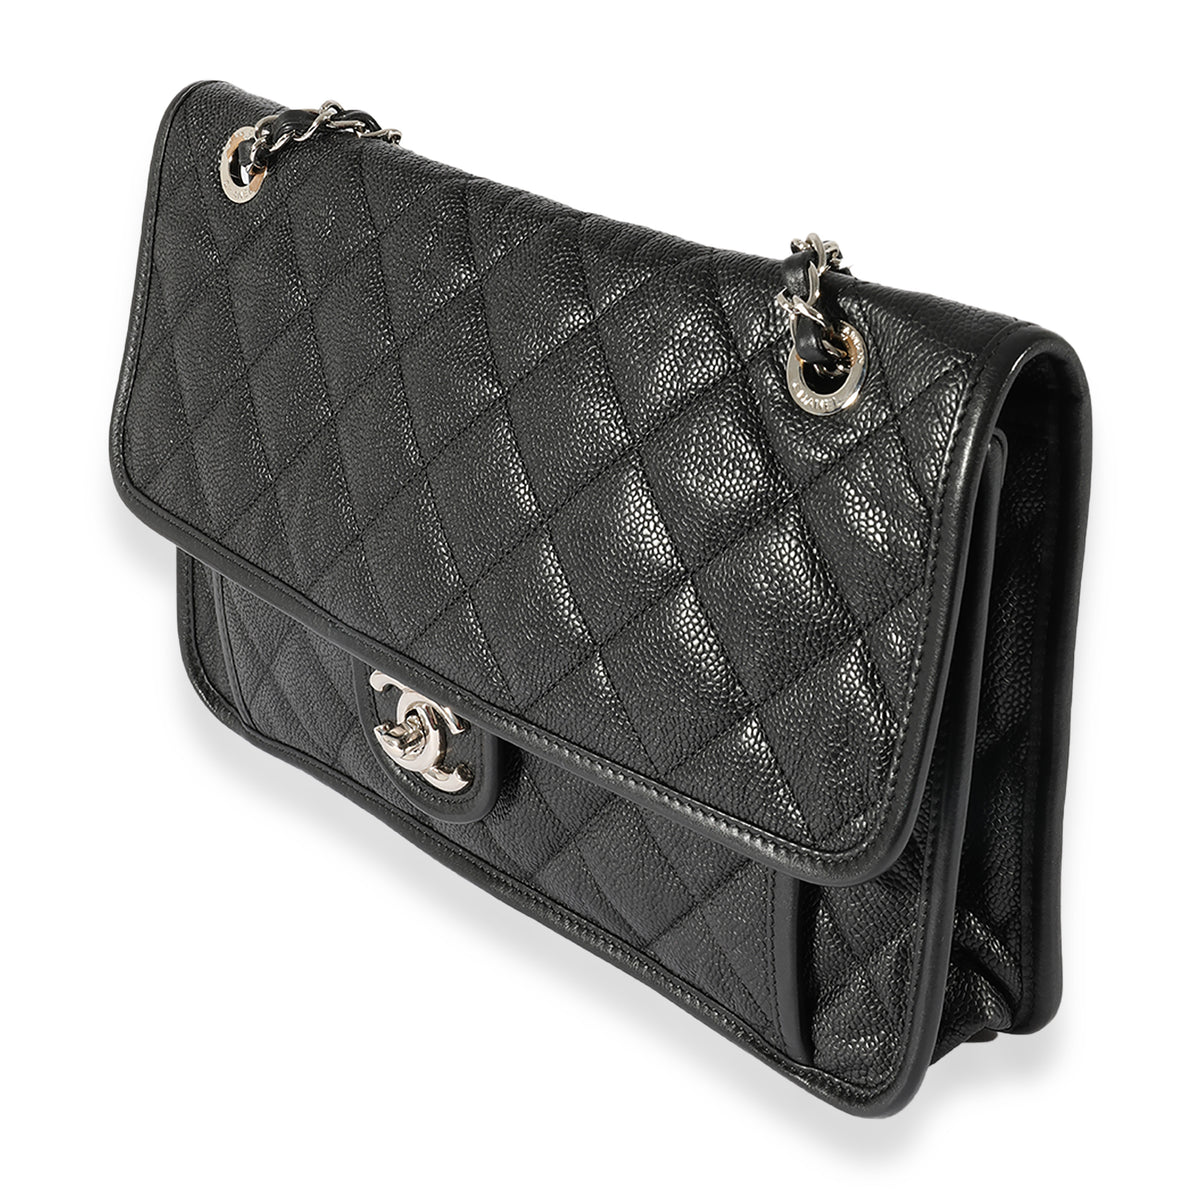 Chanel Medium French Riviera Flap Bag